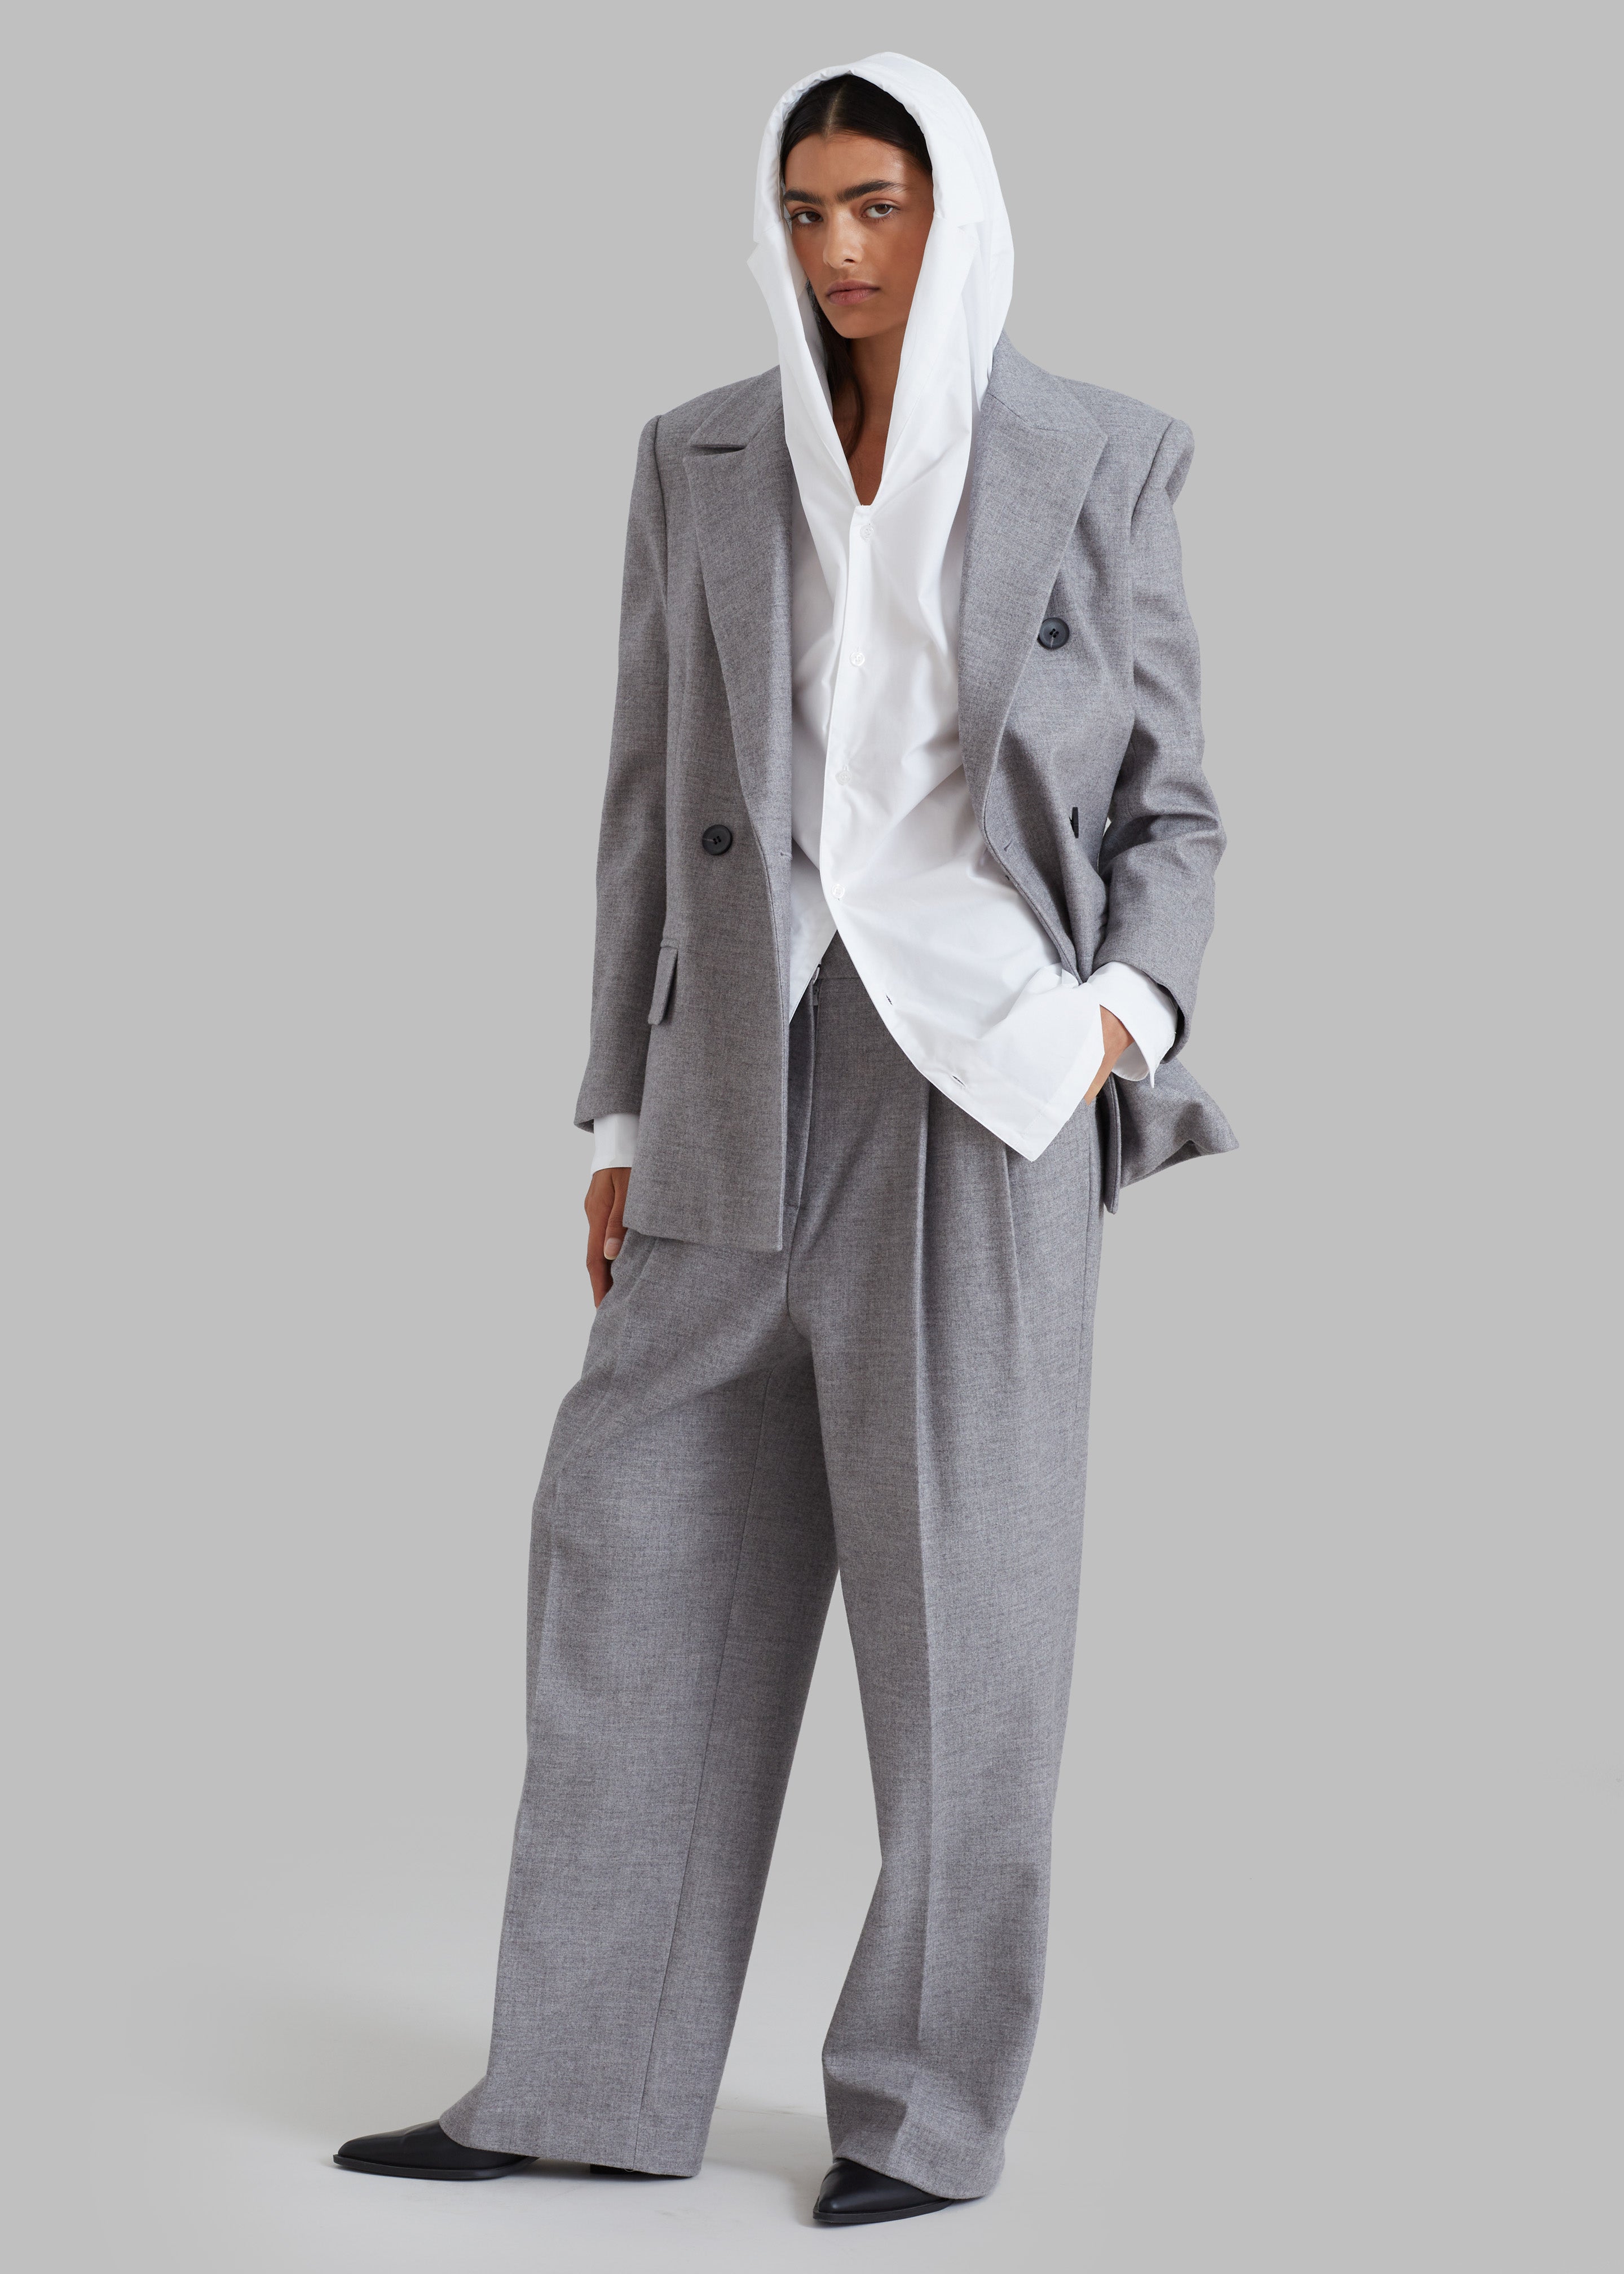 What pants (not khaki) go with a navy blazer - Weddingbee | Navy blazer,  Navy blazer grey pants, Grey pants